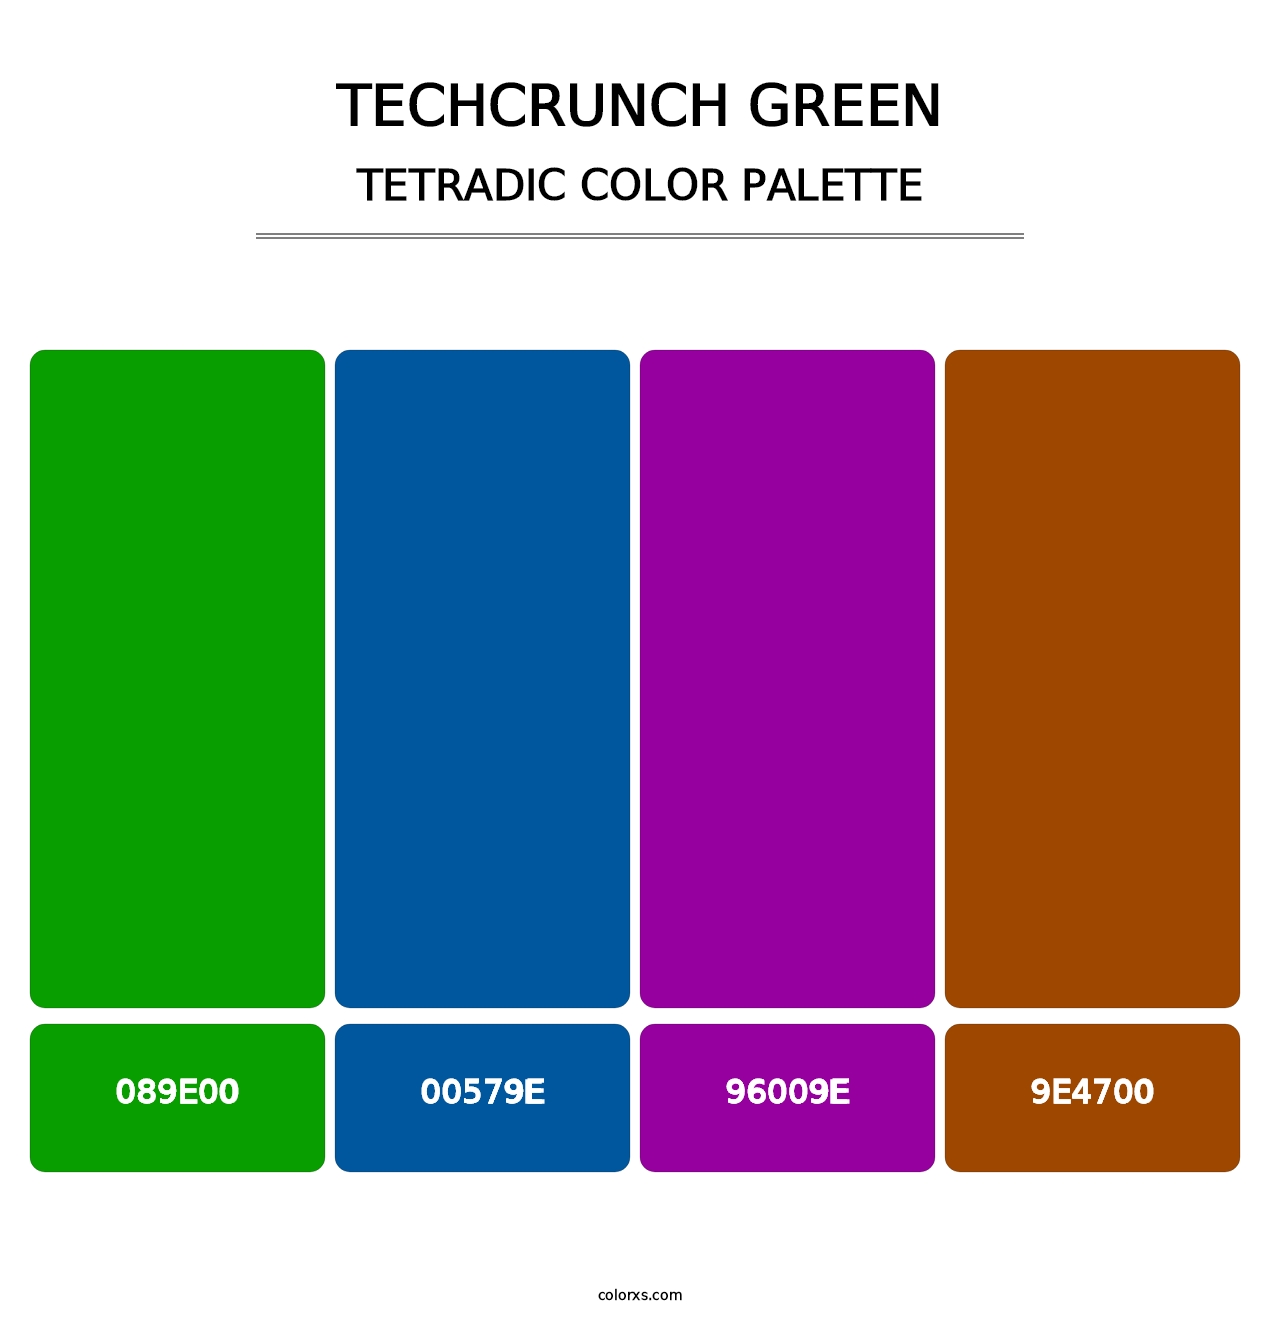 TechCrunch Green - Tetradic Color Palette